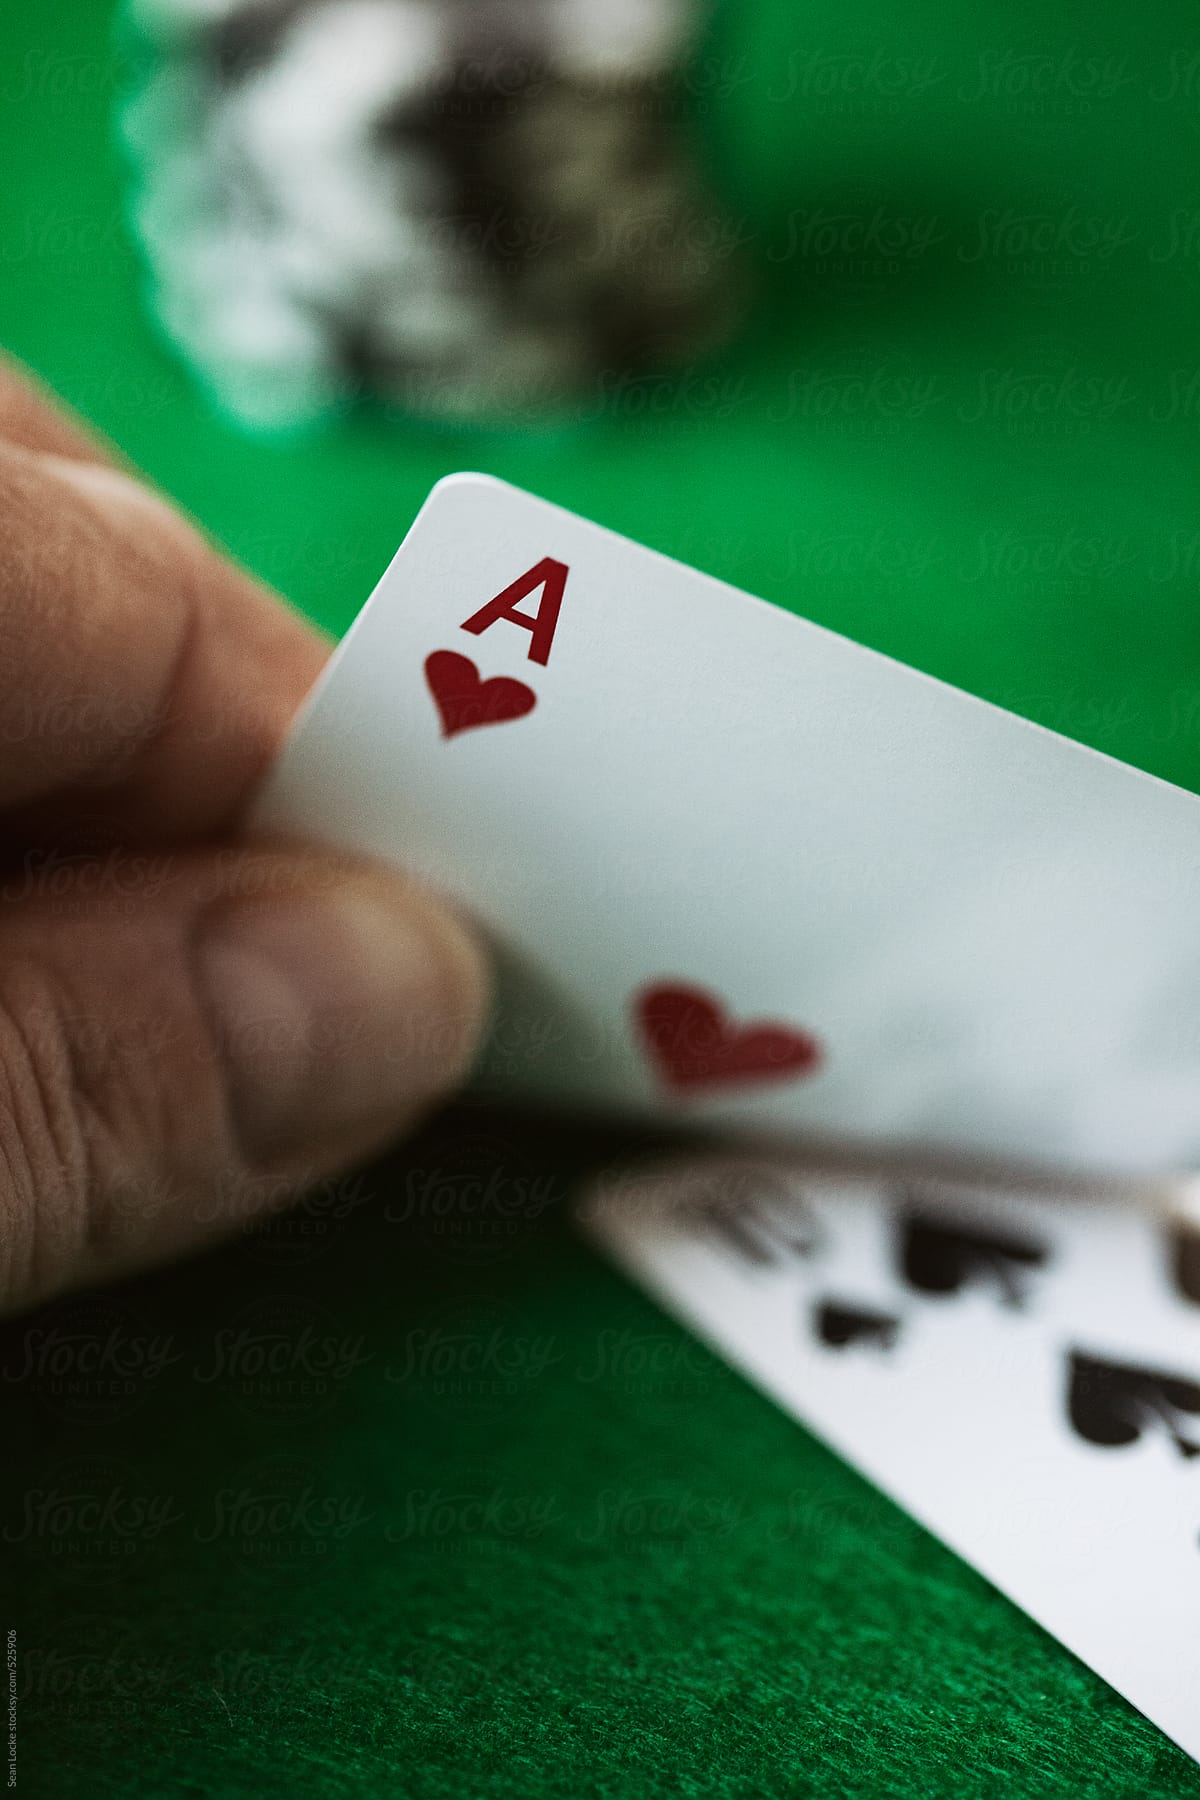 Cards: Peeking Under To See Ace In Blackjack